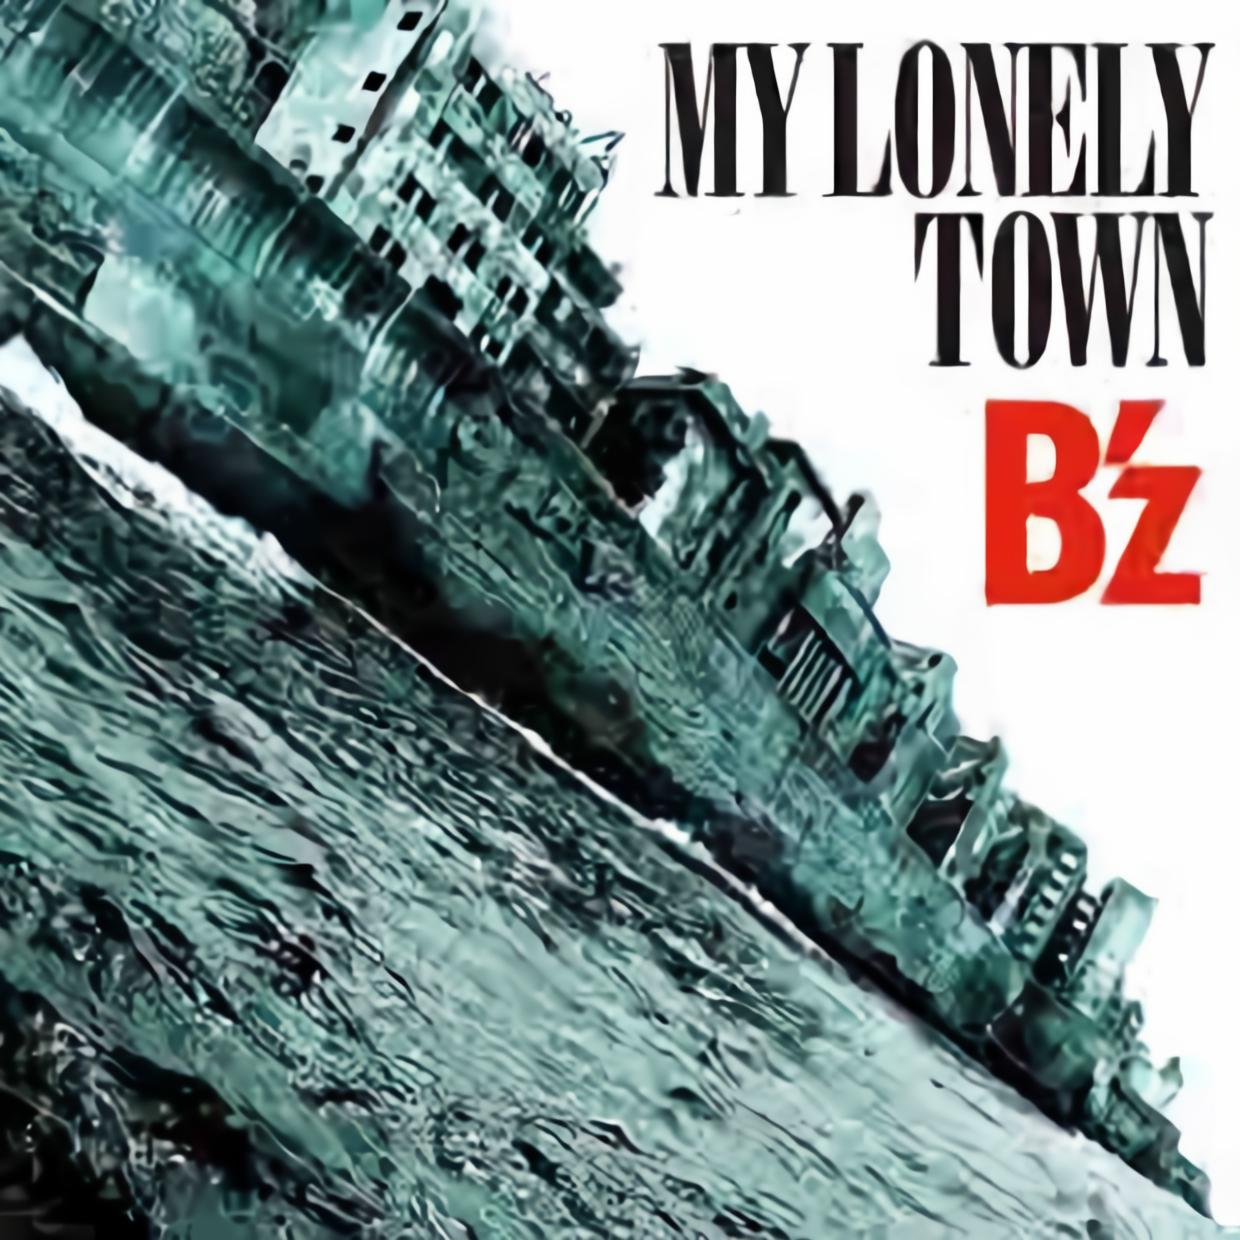 Y Town B Z 高音质在线试听 My Lonely Town歌词 歌曲下载 酷狗音乐mylonel